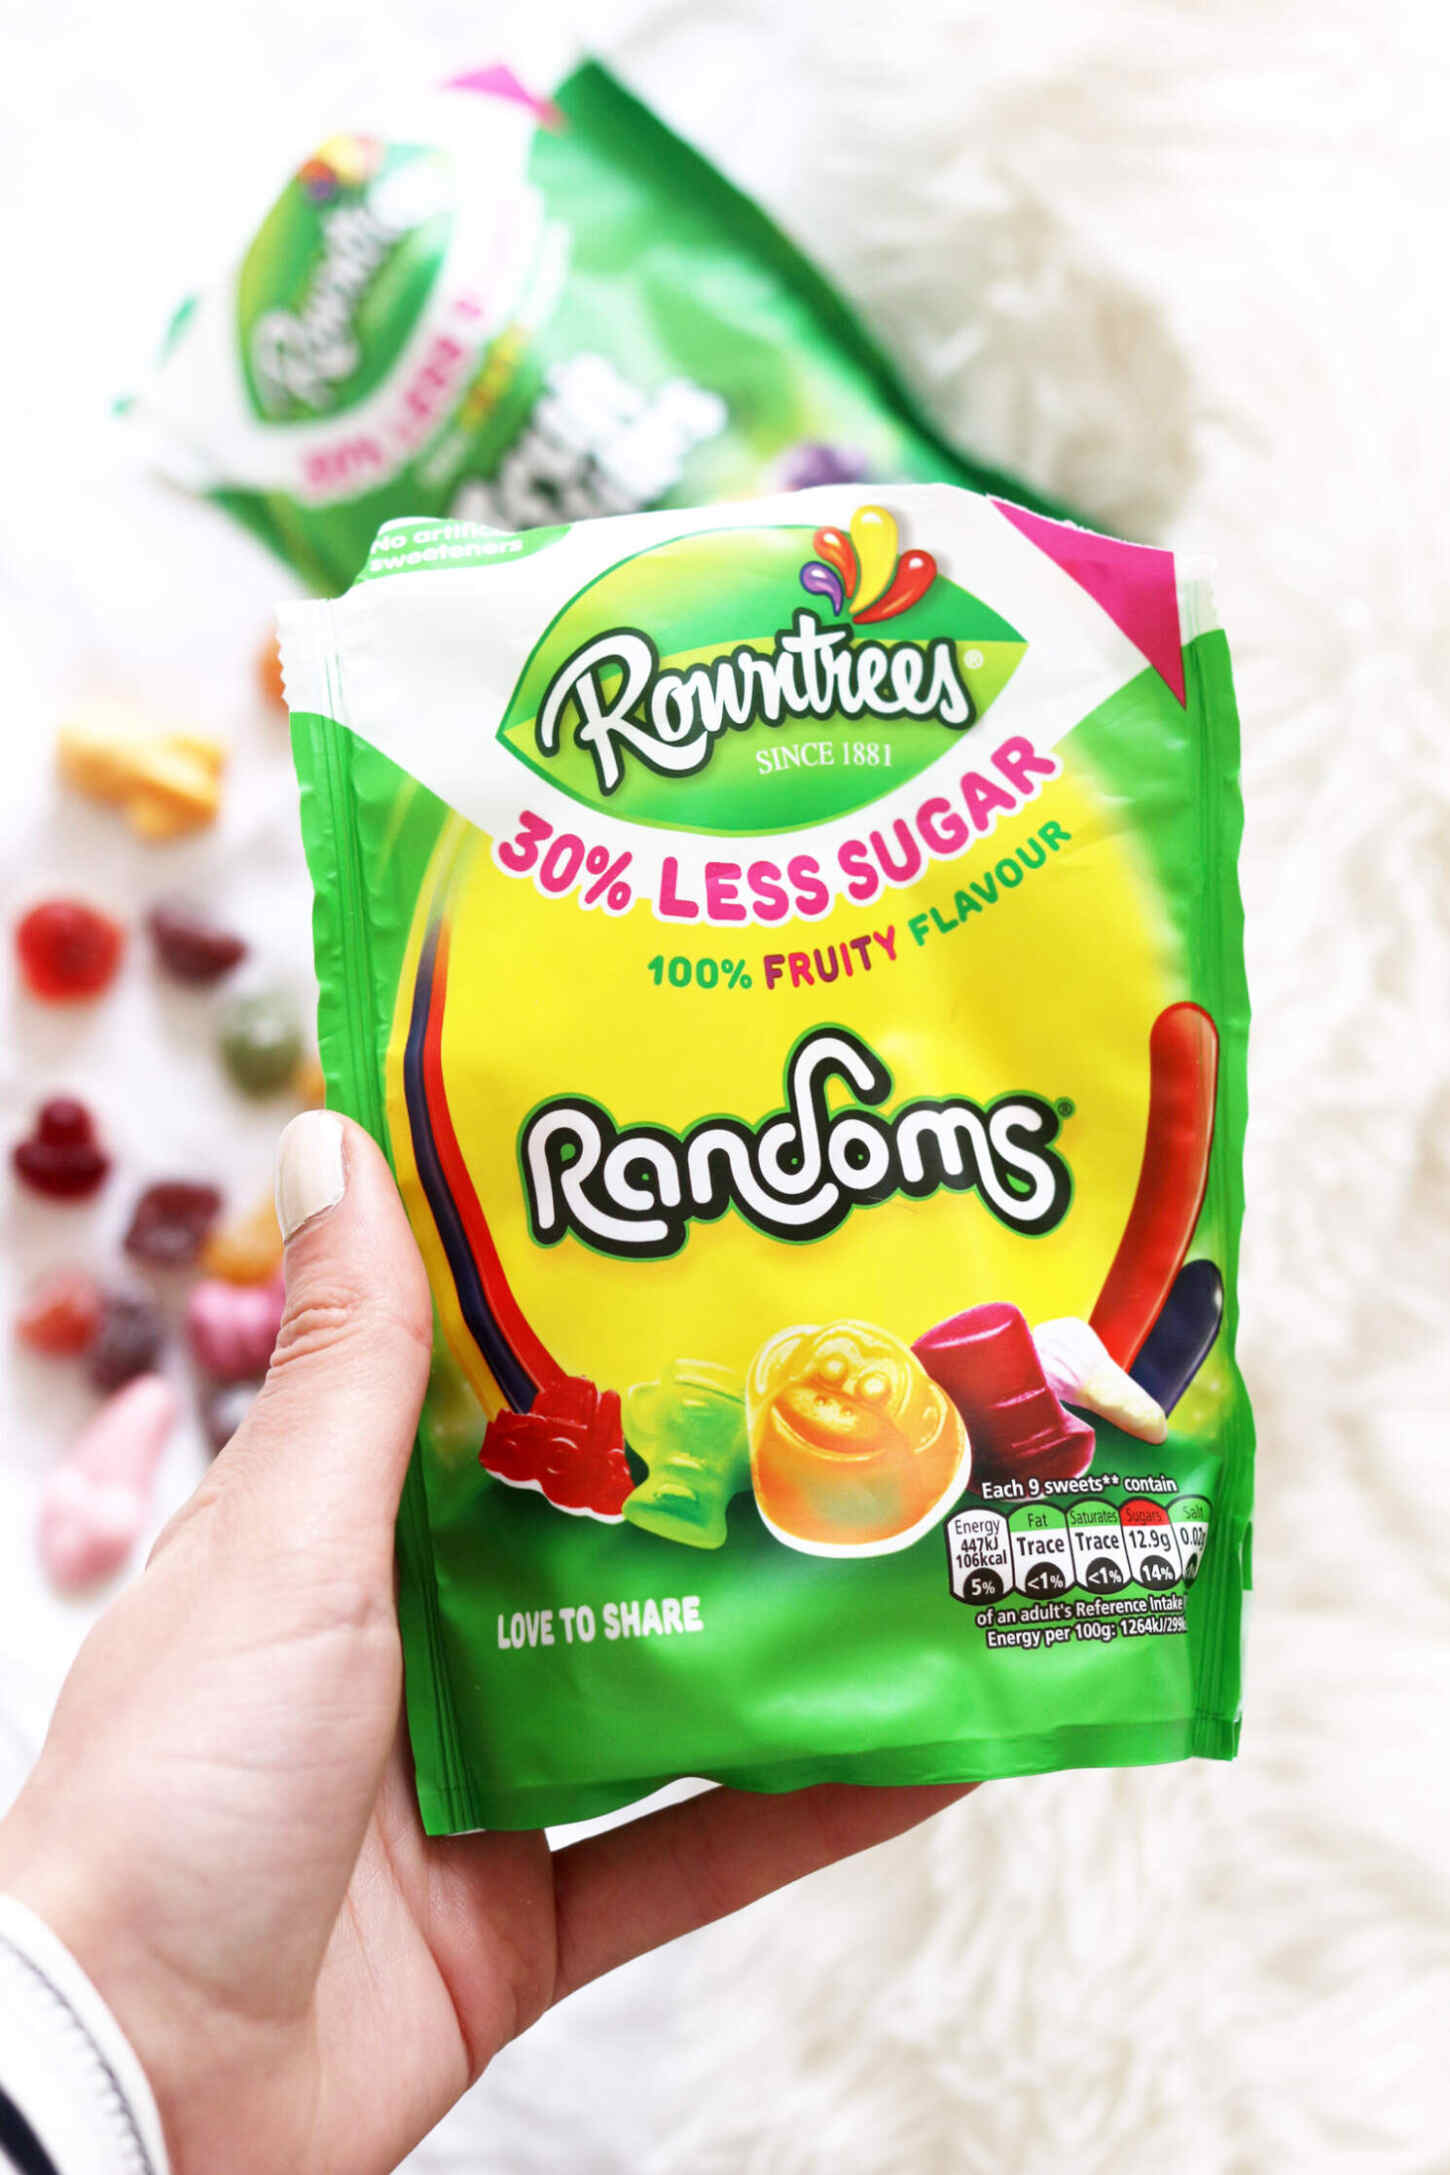 rowntrees-30-less-sugar-fruit-pastilles-randoms-review-4